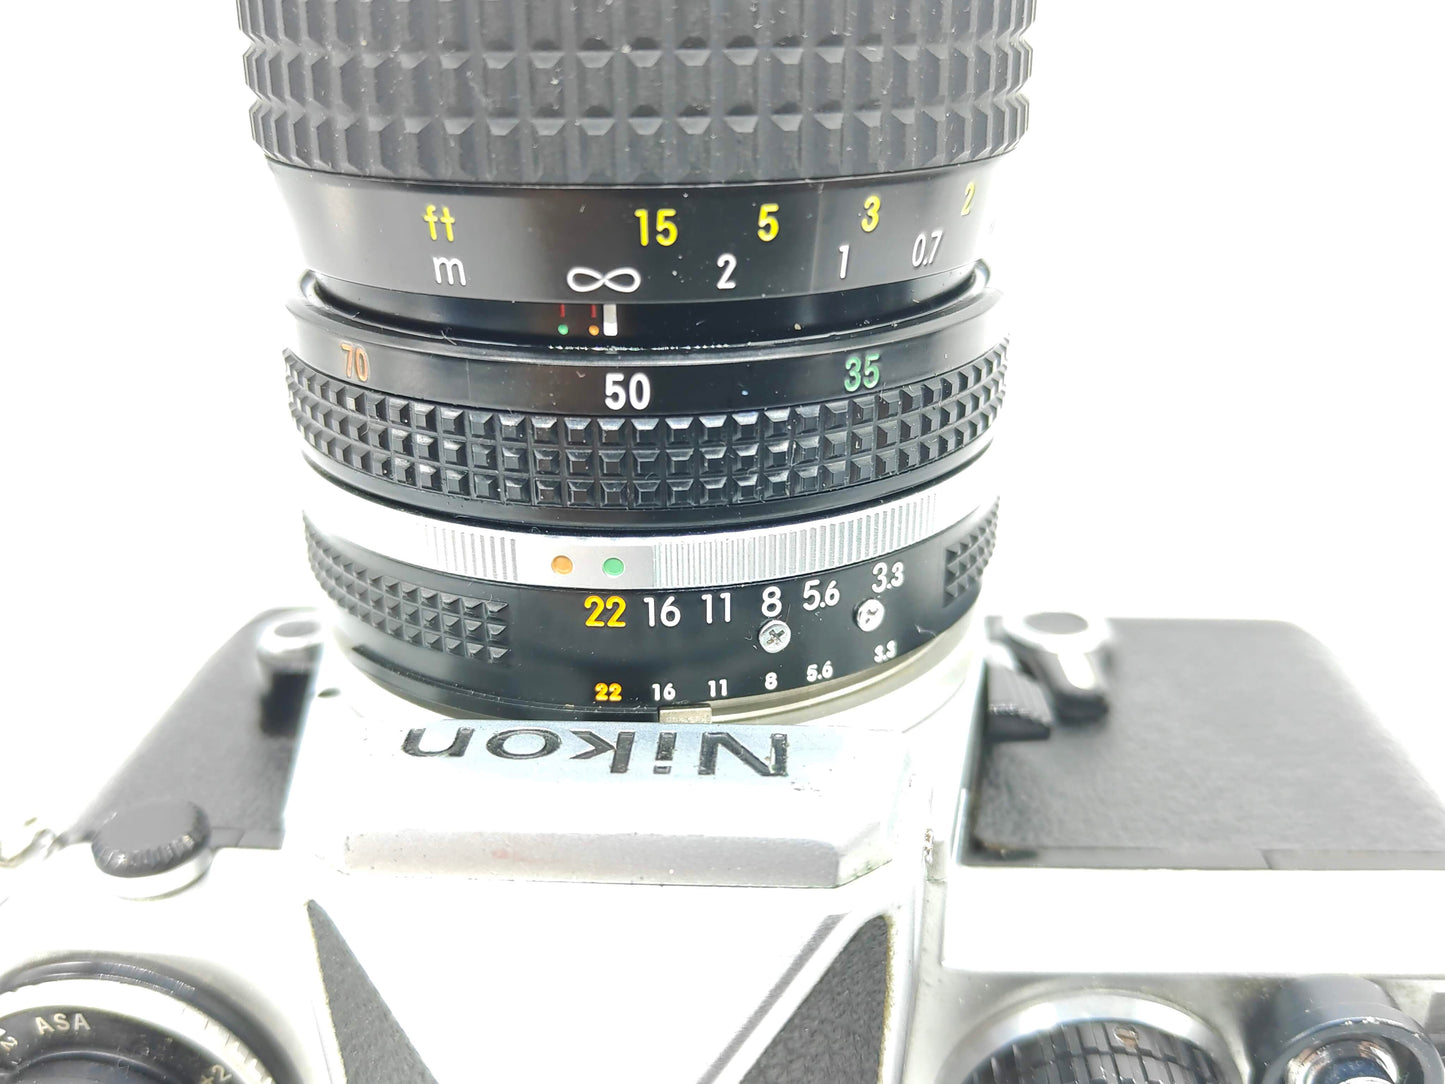 Nikon FE SLR (silver) film camera